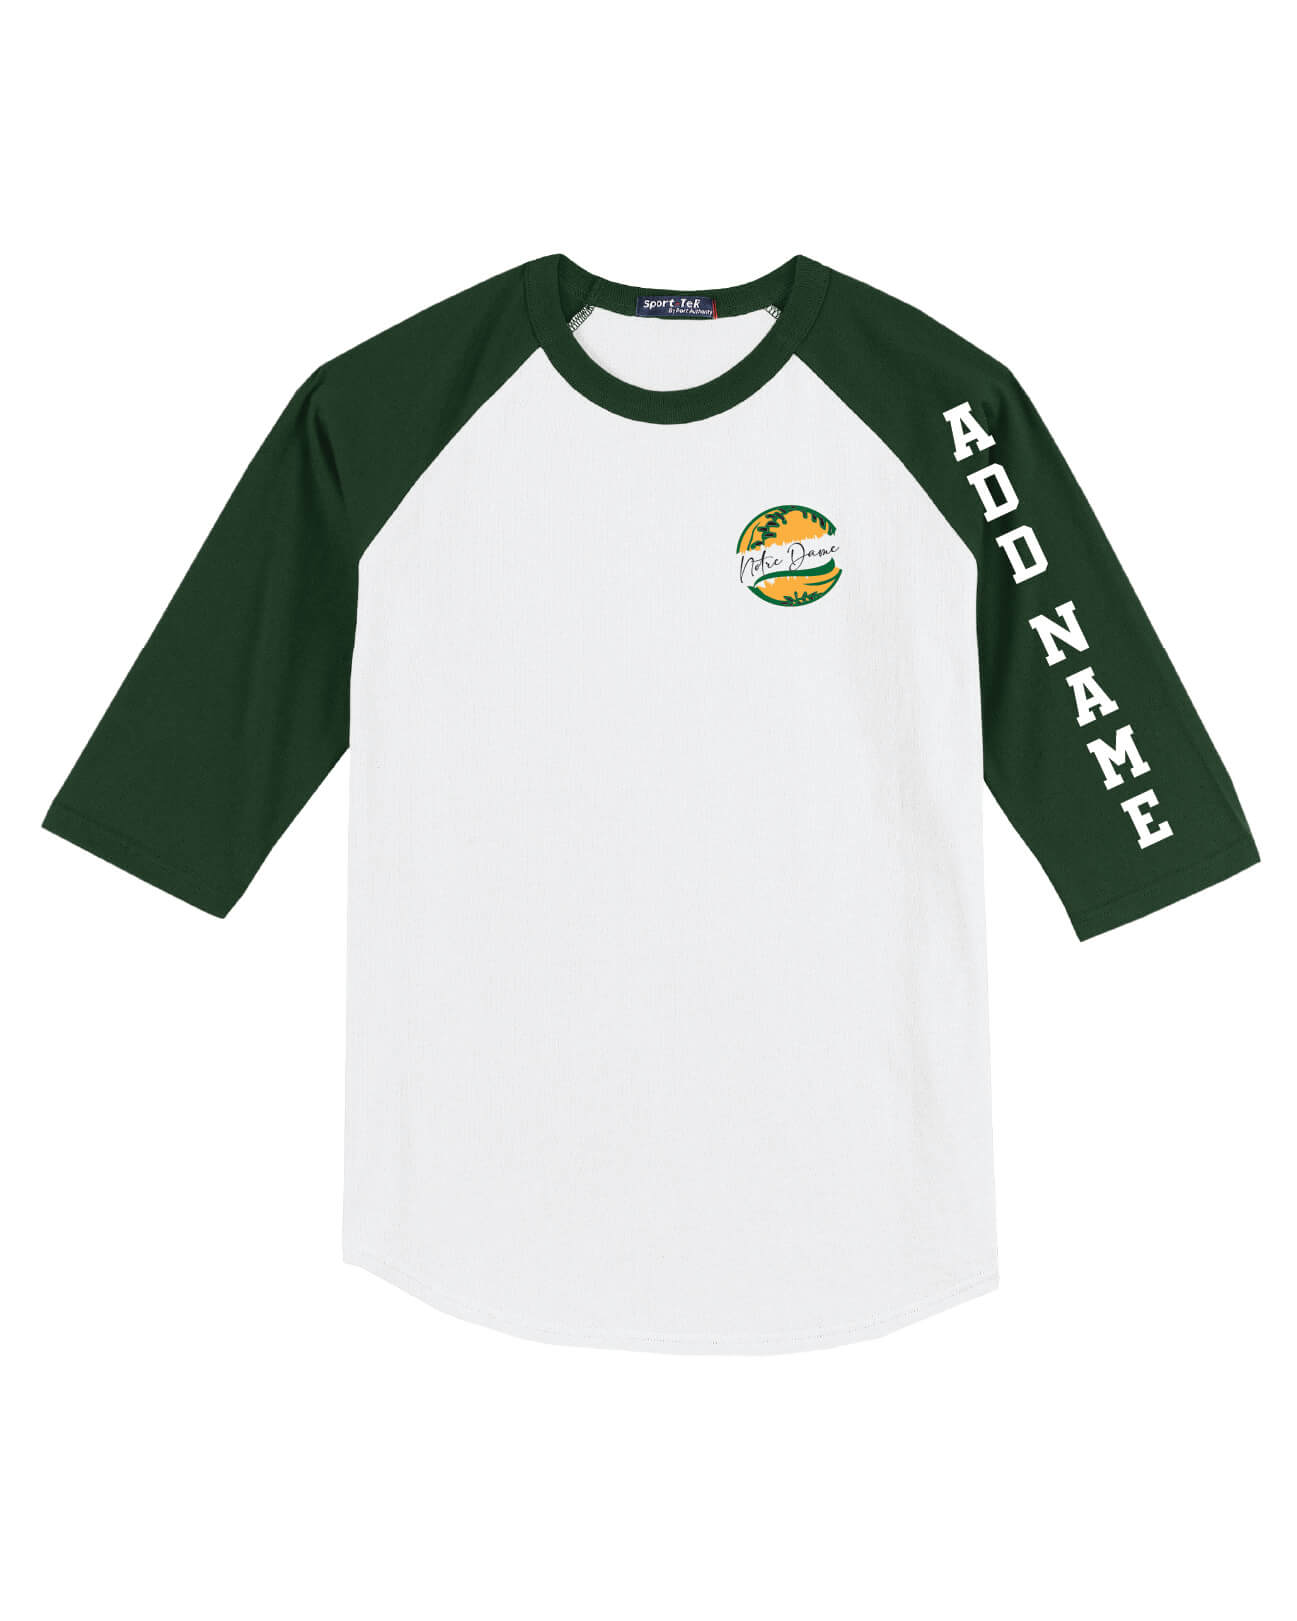 Spartans Sport Tek Colorblock Raglan Jersey green/white front